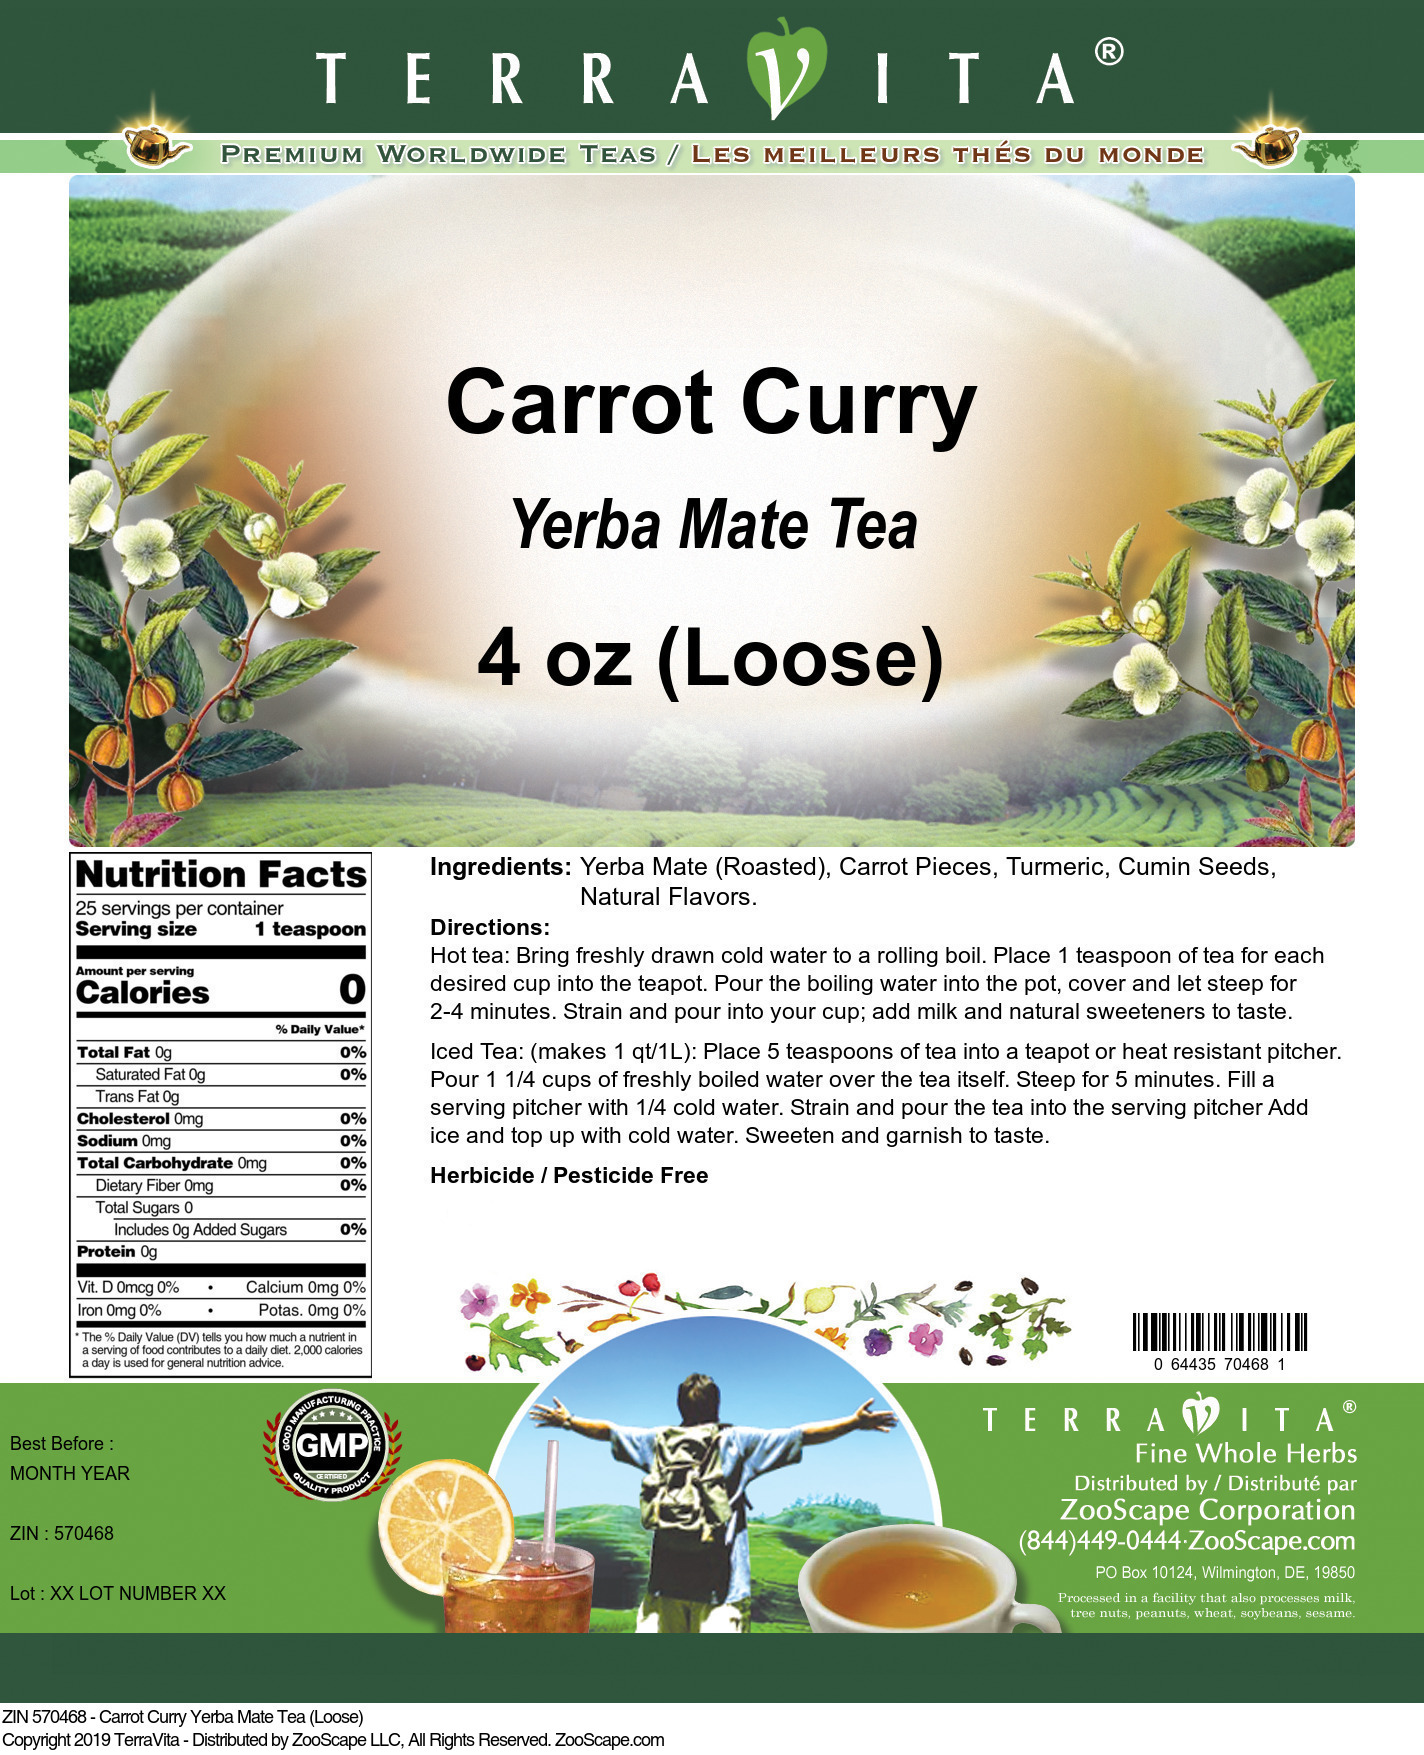 Carrot Curry Yerba Mate Tea (Loose) - Label